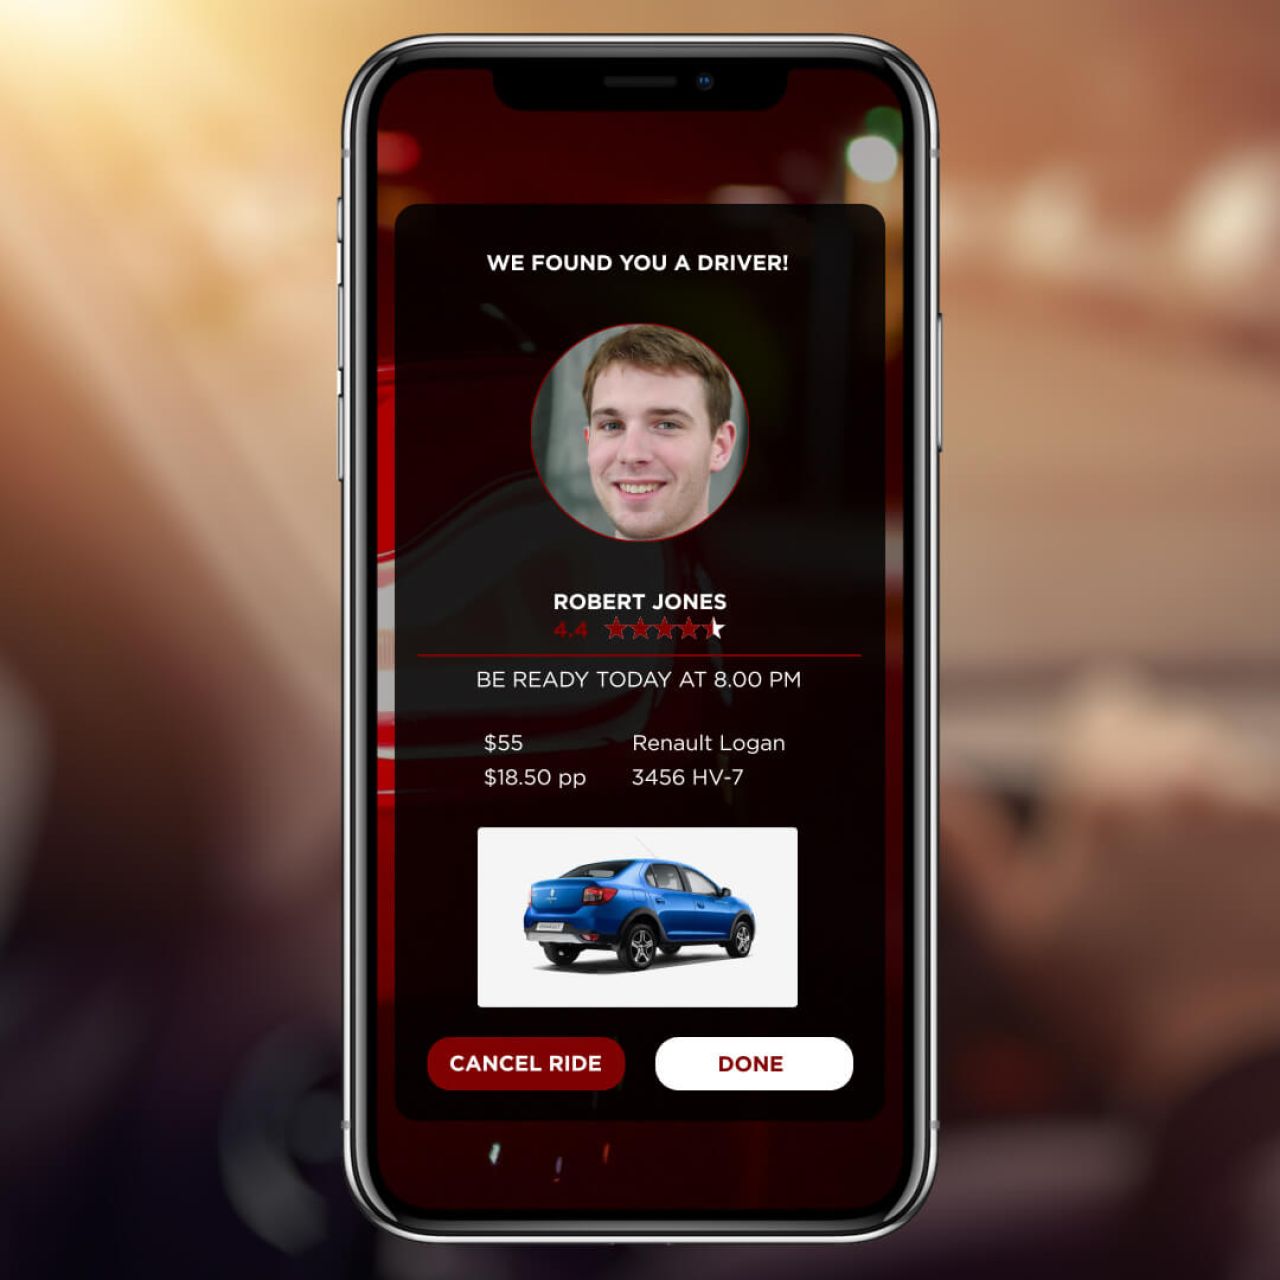 Ride App - Found a driver